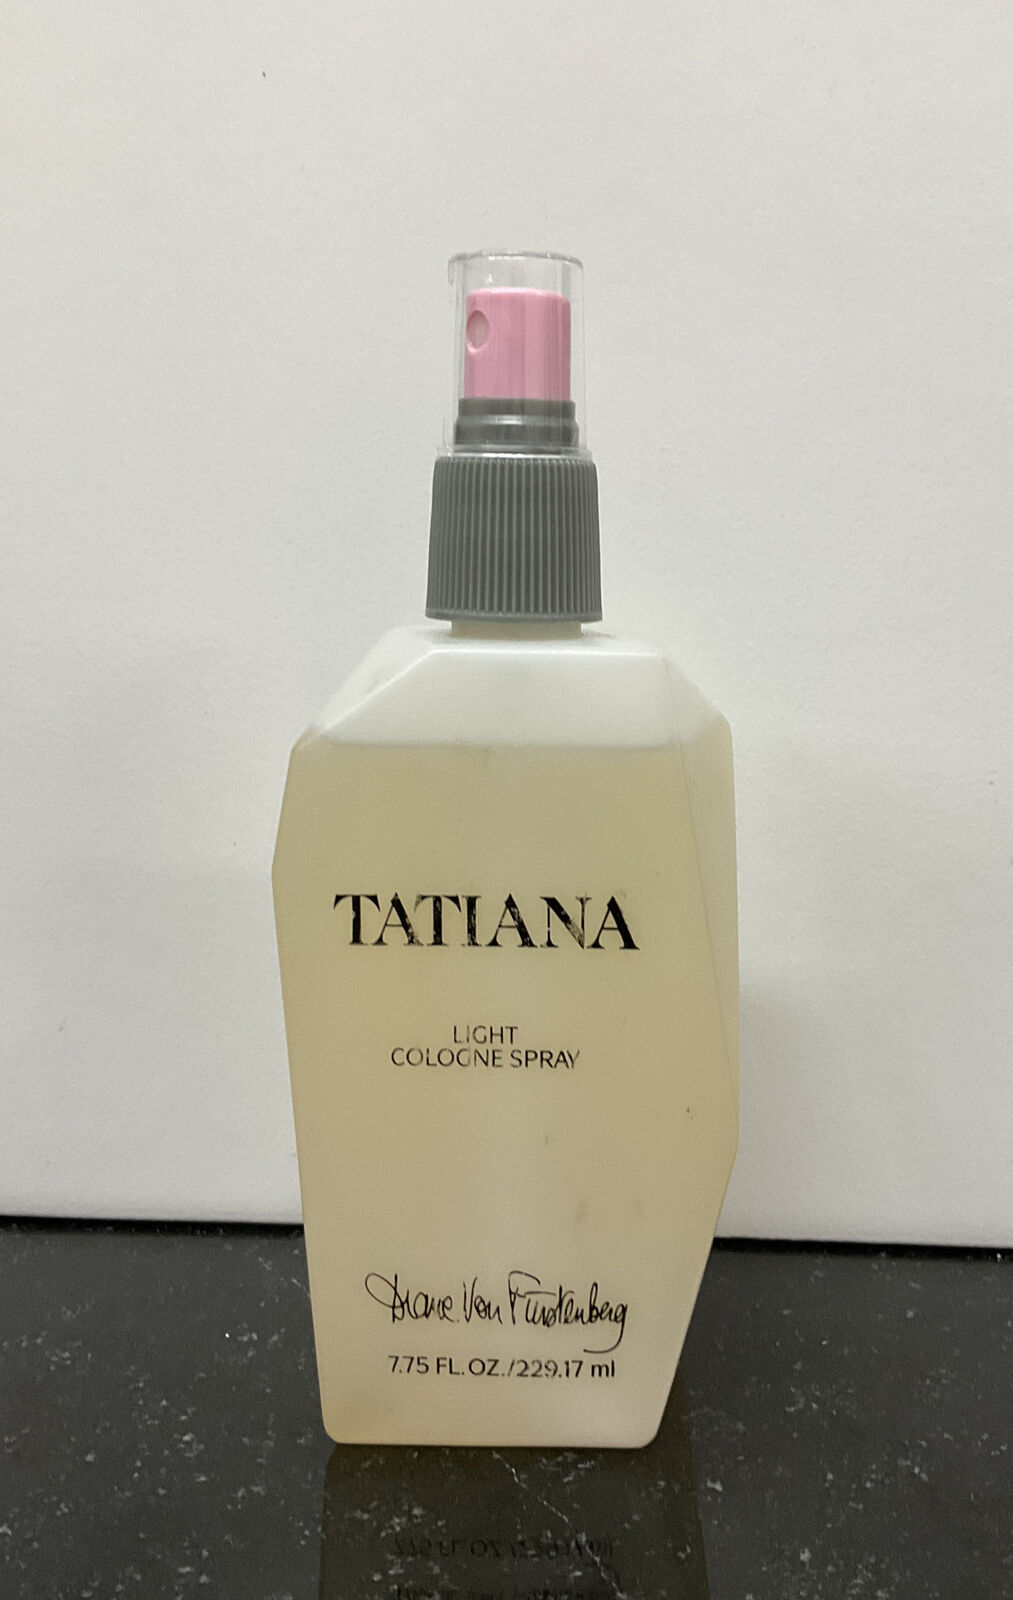 Tatiana by Diane Von Furstenberg Light Cologne Spray 7.75 OZ FULL AS PICTURED